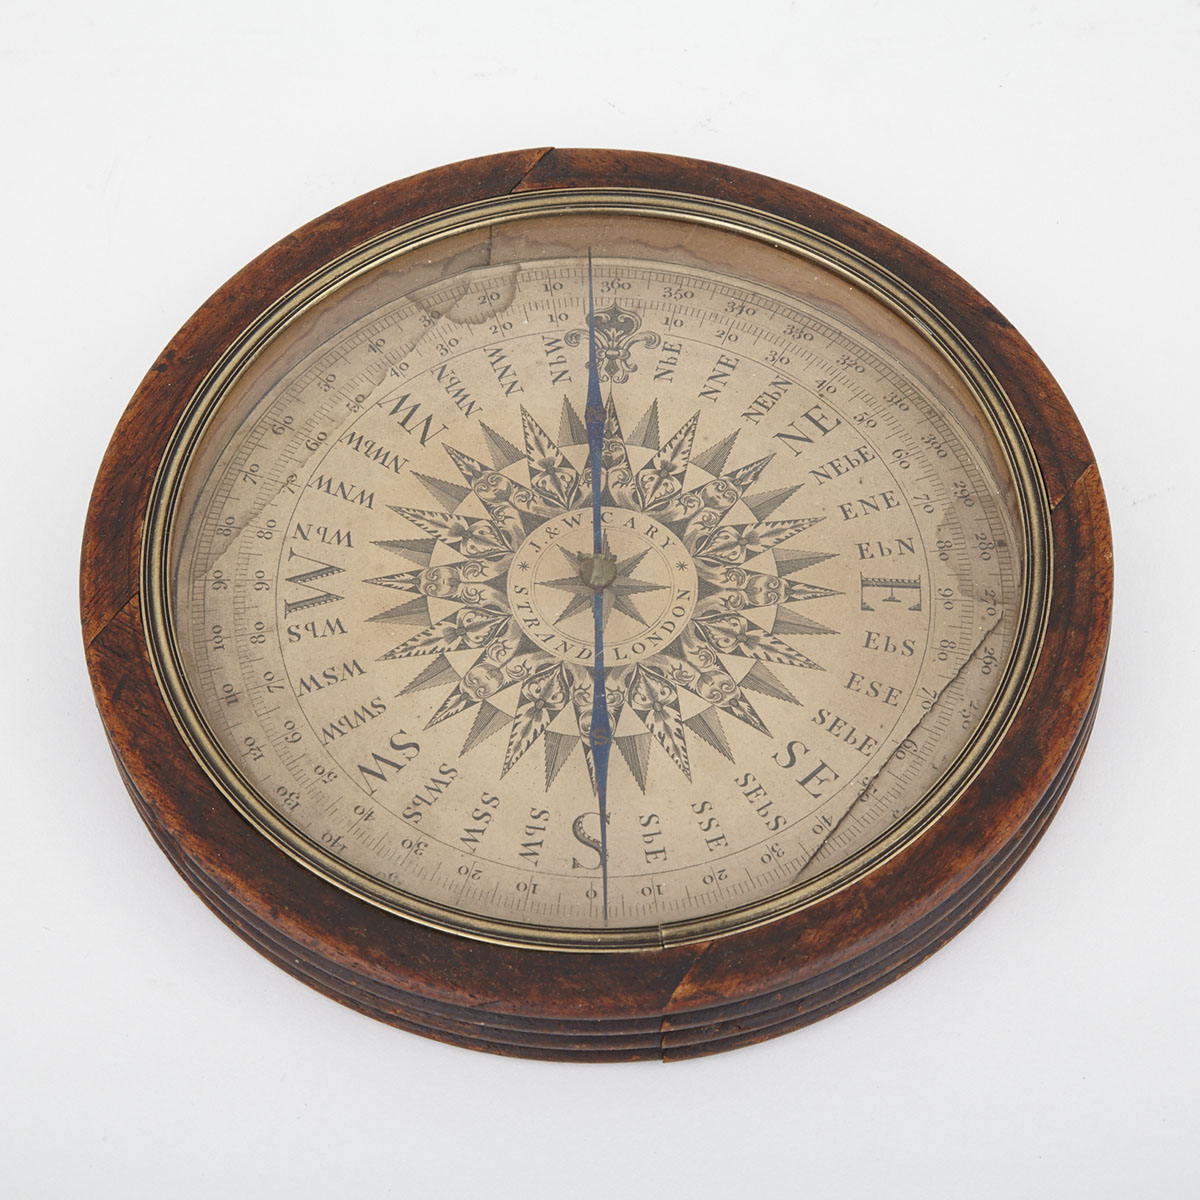 British Surveyor’s Compass, J. & W. Cary, Strand, London, 19th century